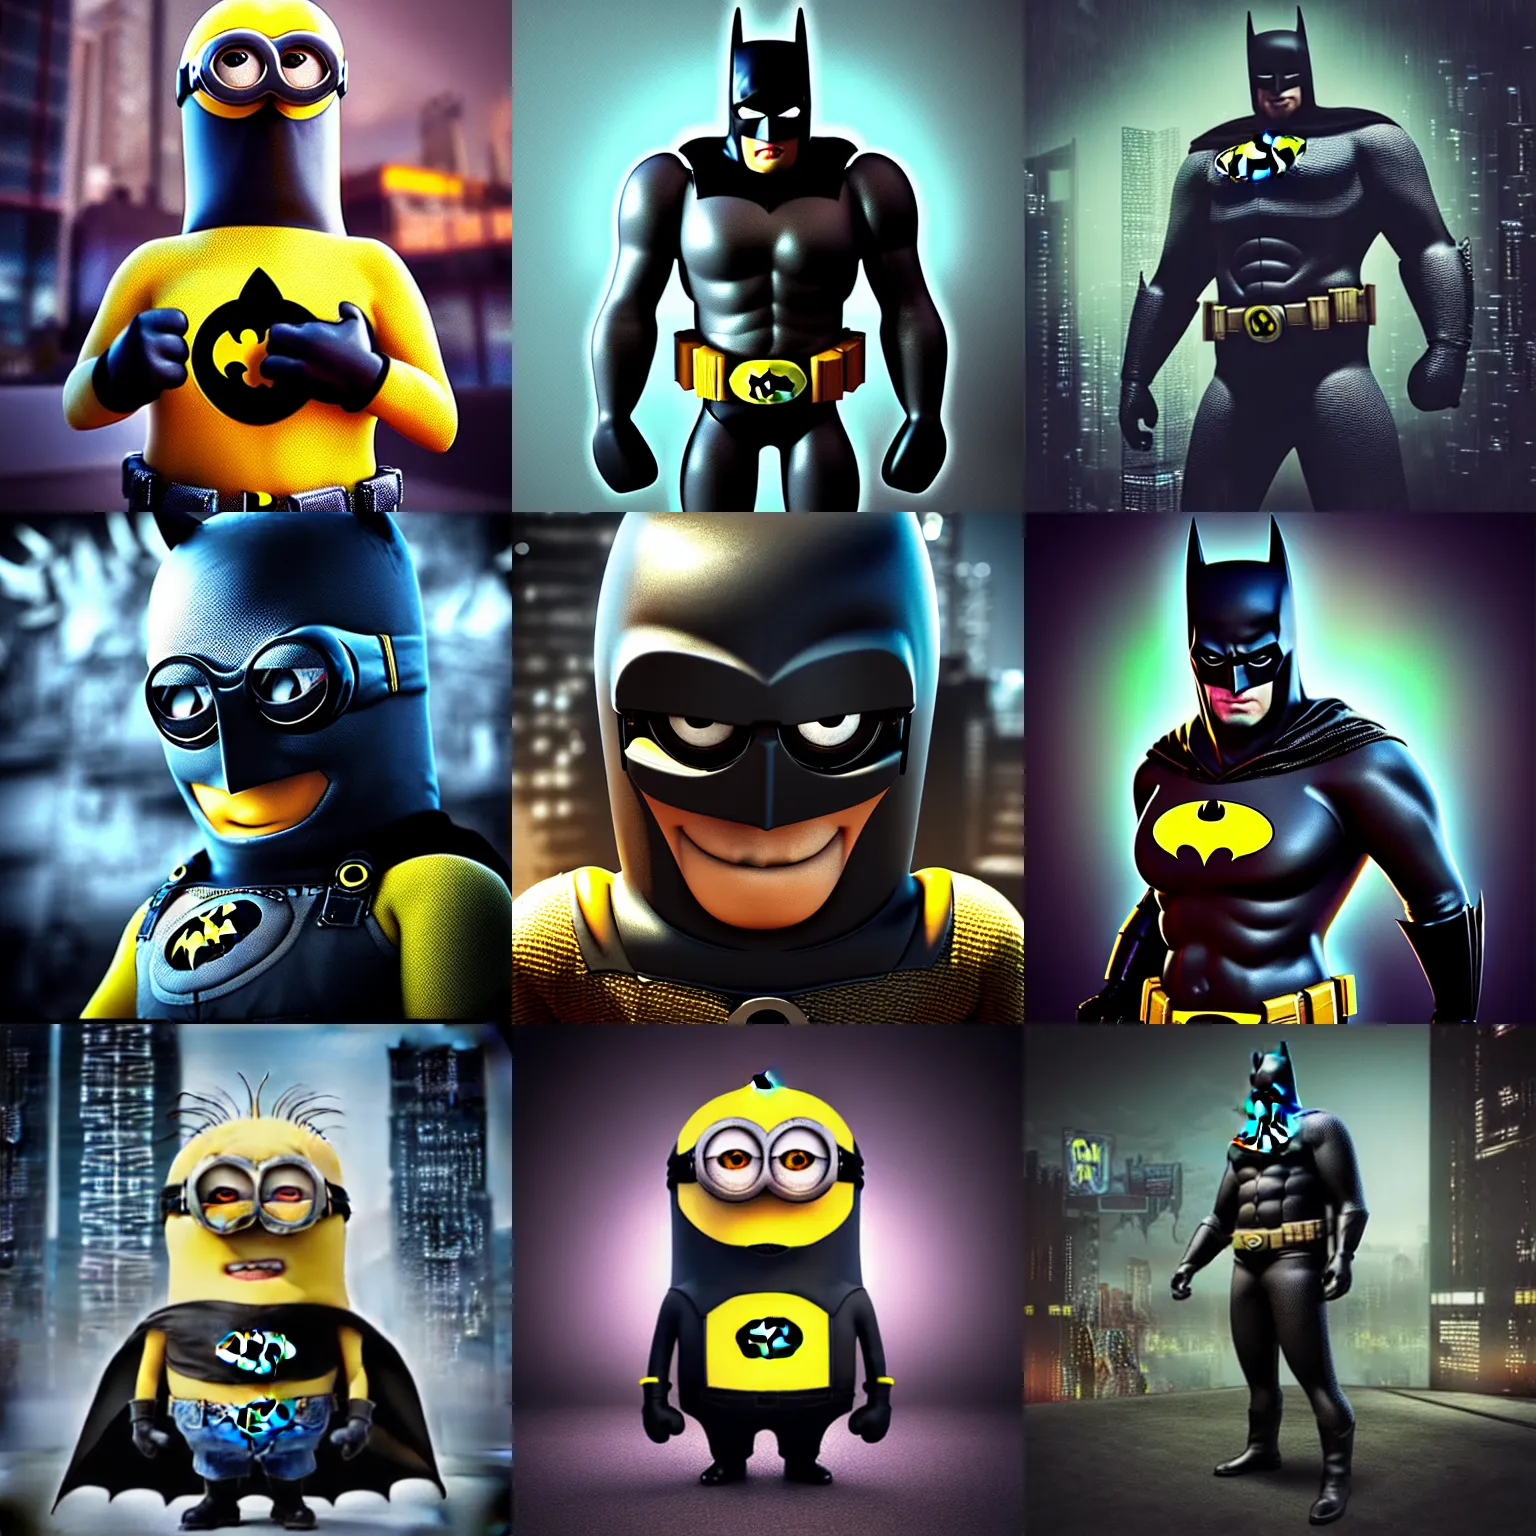 Prompt: “minion batman, UHD, hyperrealistic render, 4k, cyberpunk”